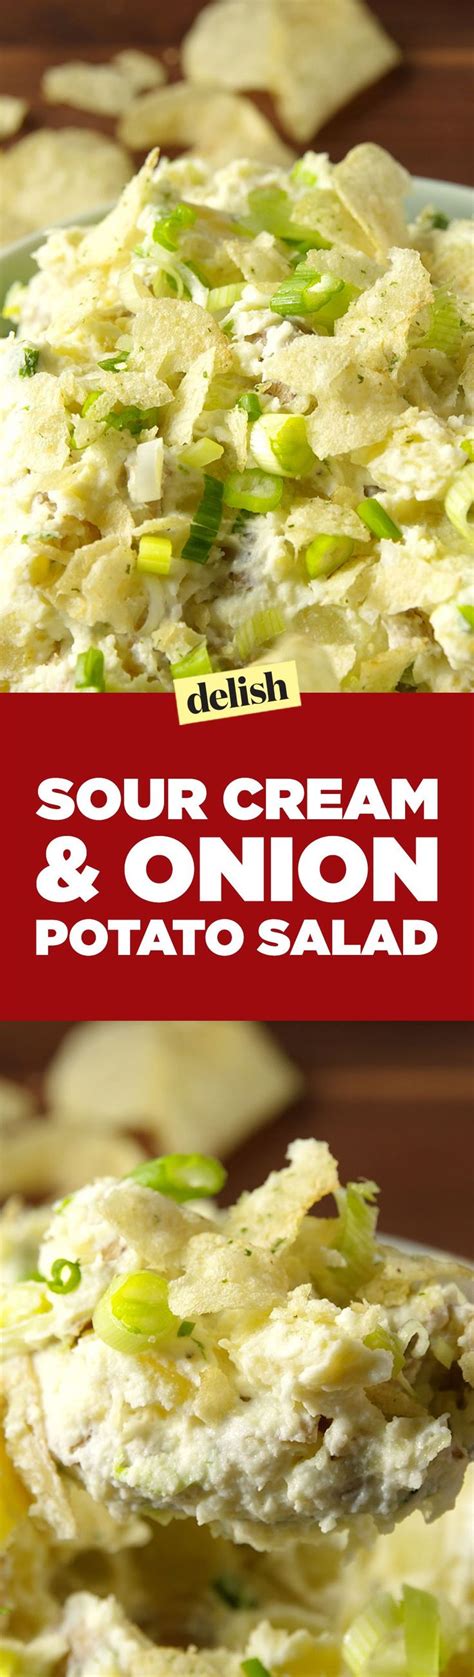 Chopped chives, garlic powder, sour cream, celery, mayonnaise and 4 more. Sour Cream 'n Onion Potato Salad | Recipe | Sour cream and onion, Potato salad, Sour cream